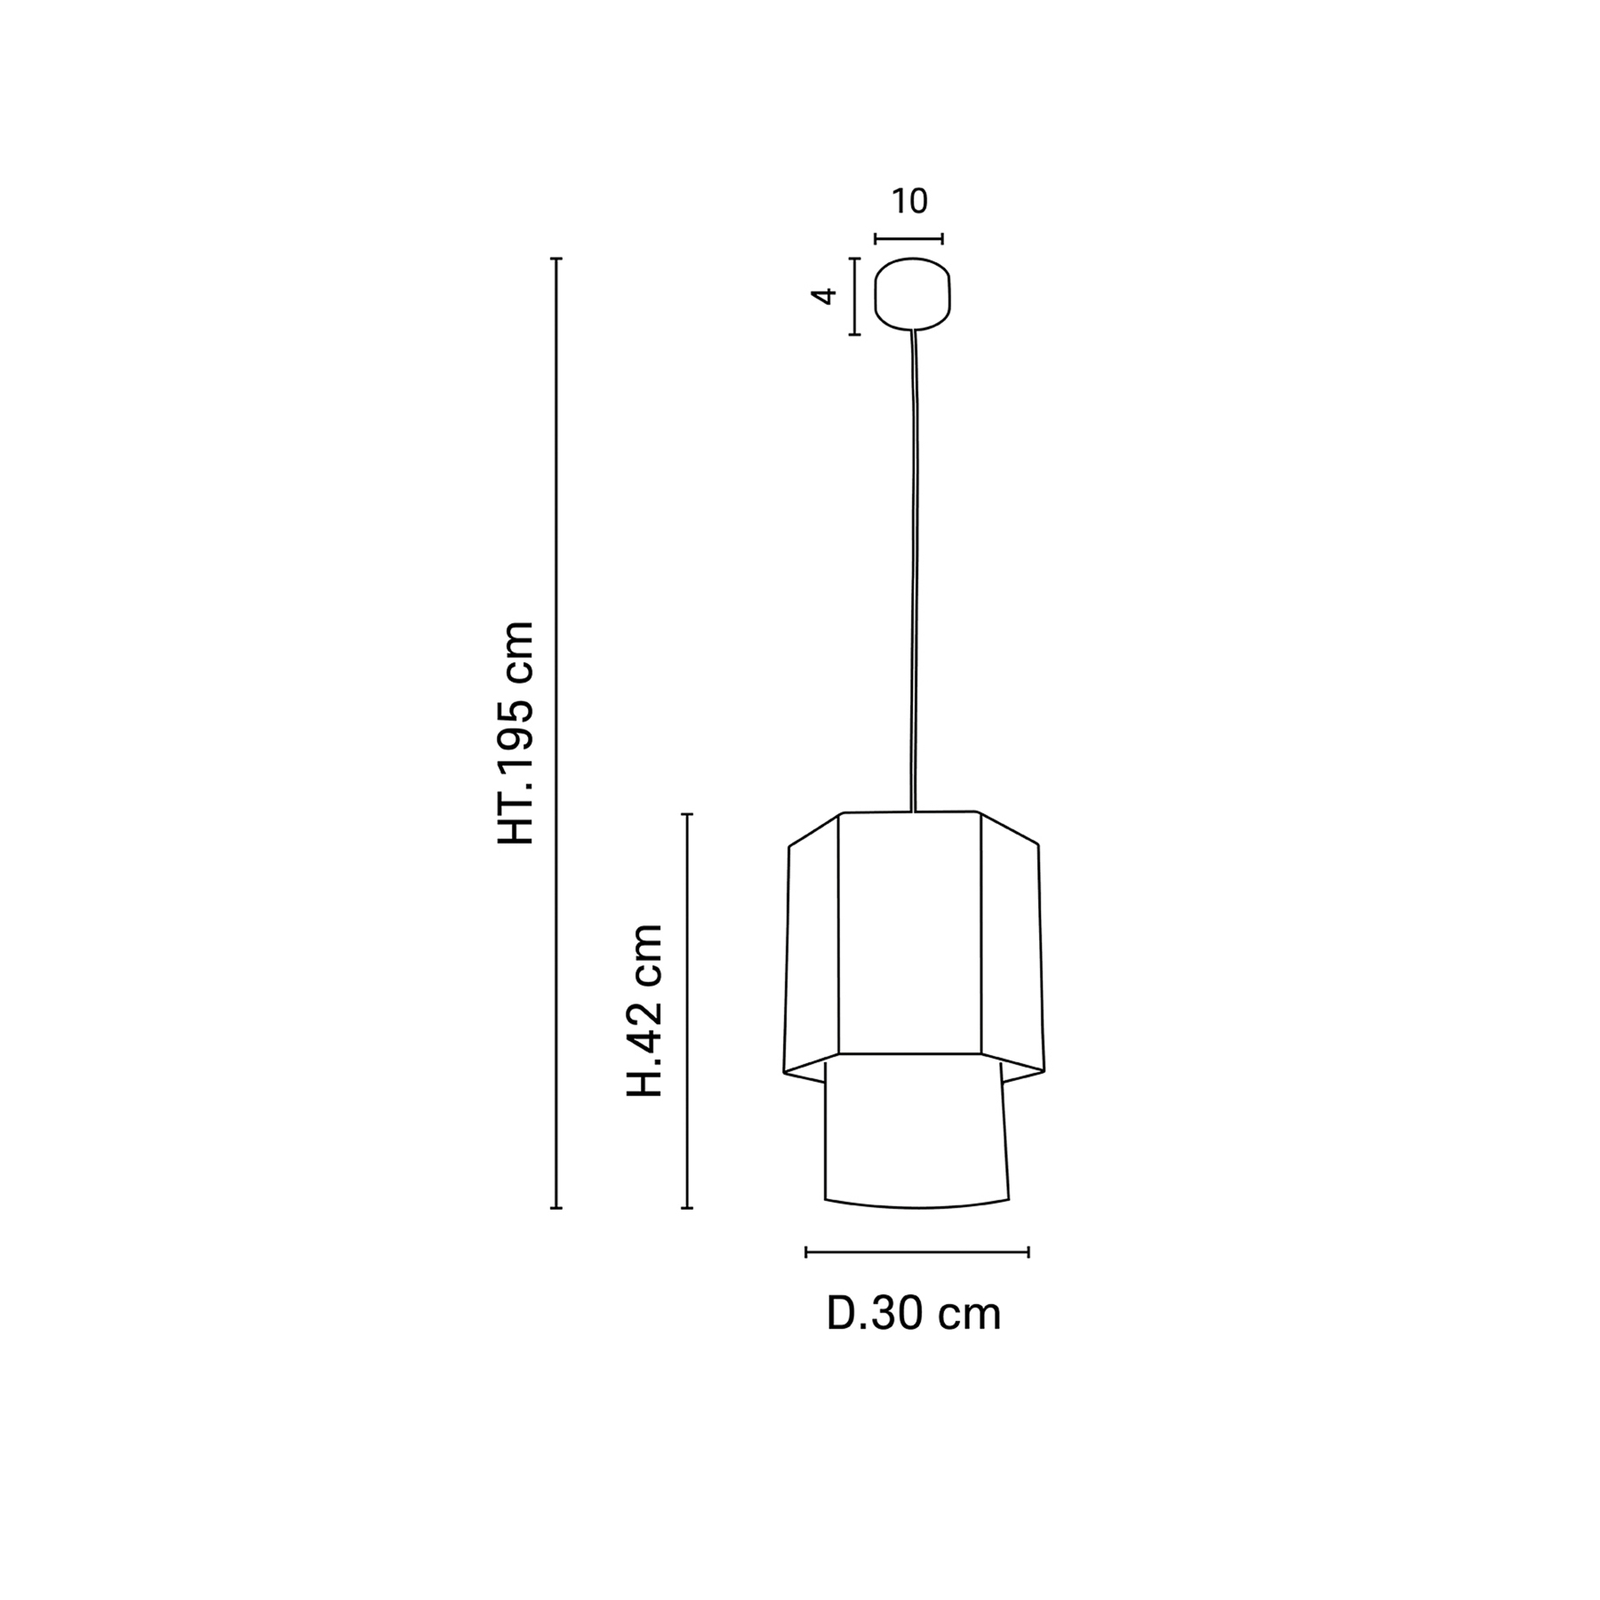 MARKET SET Marrakech hanglamp, 30x42cm, kaki